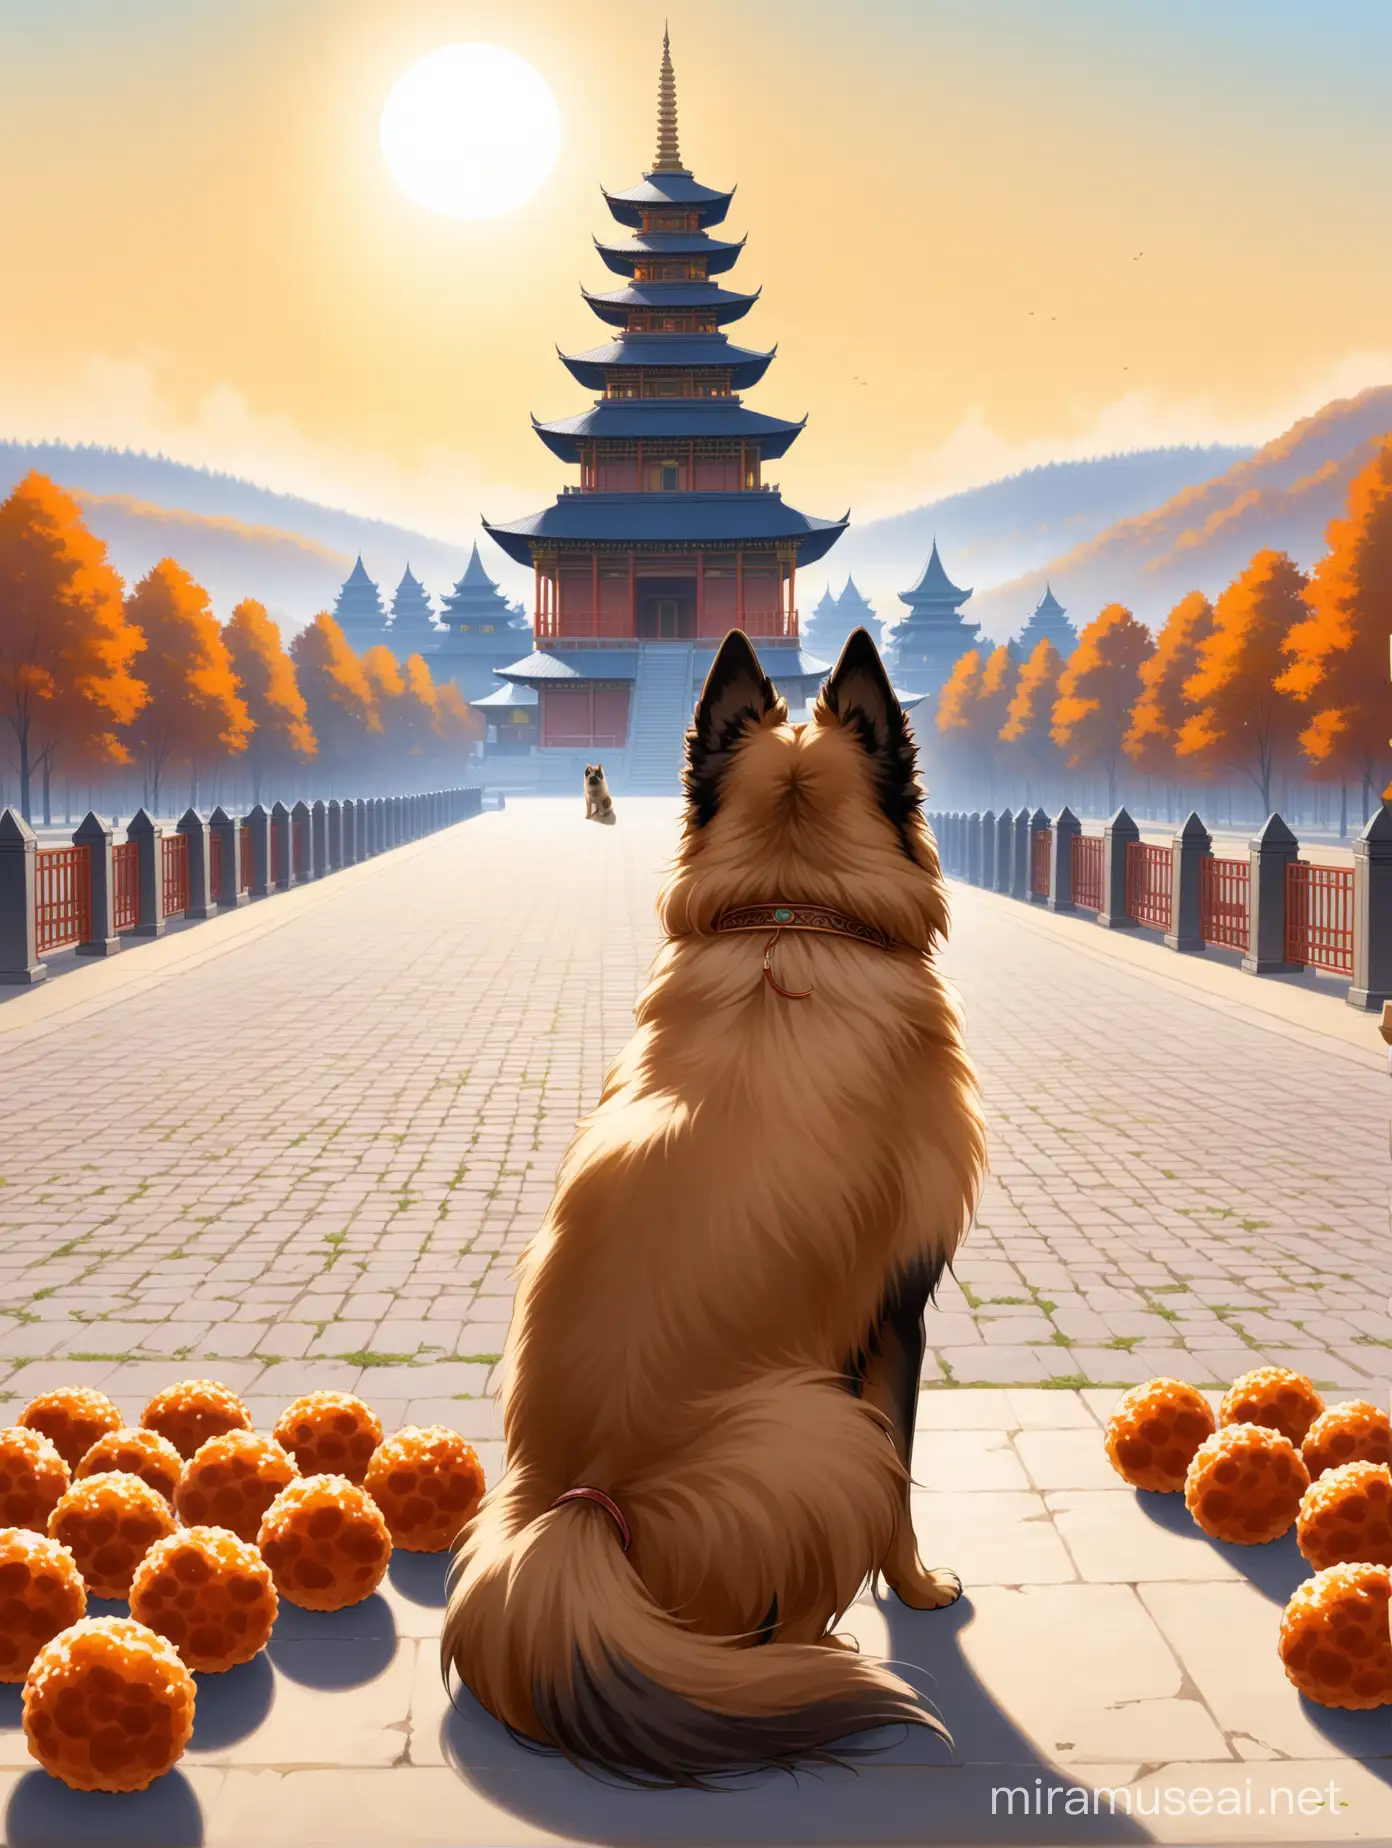 Belgian Tervuren Dog Contemplating Temple Surrounded by Meatballs